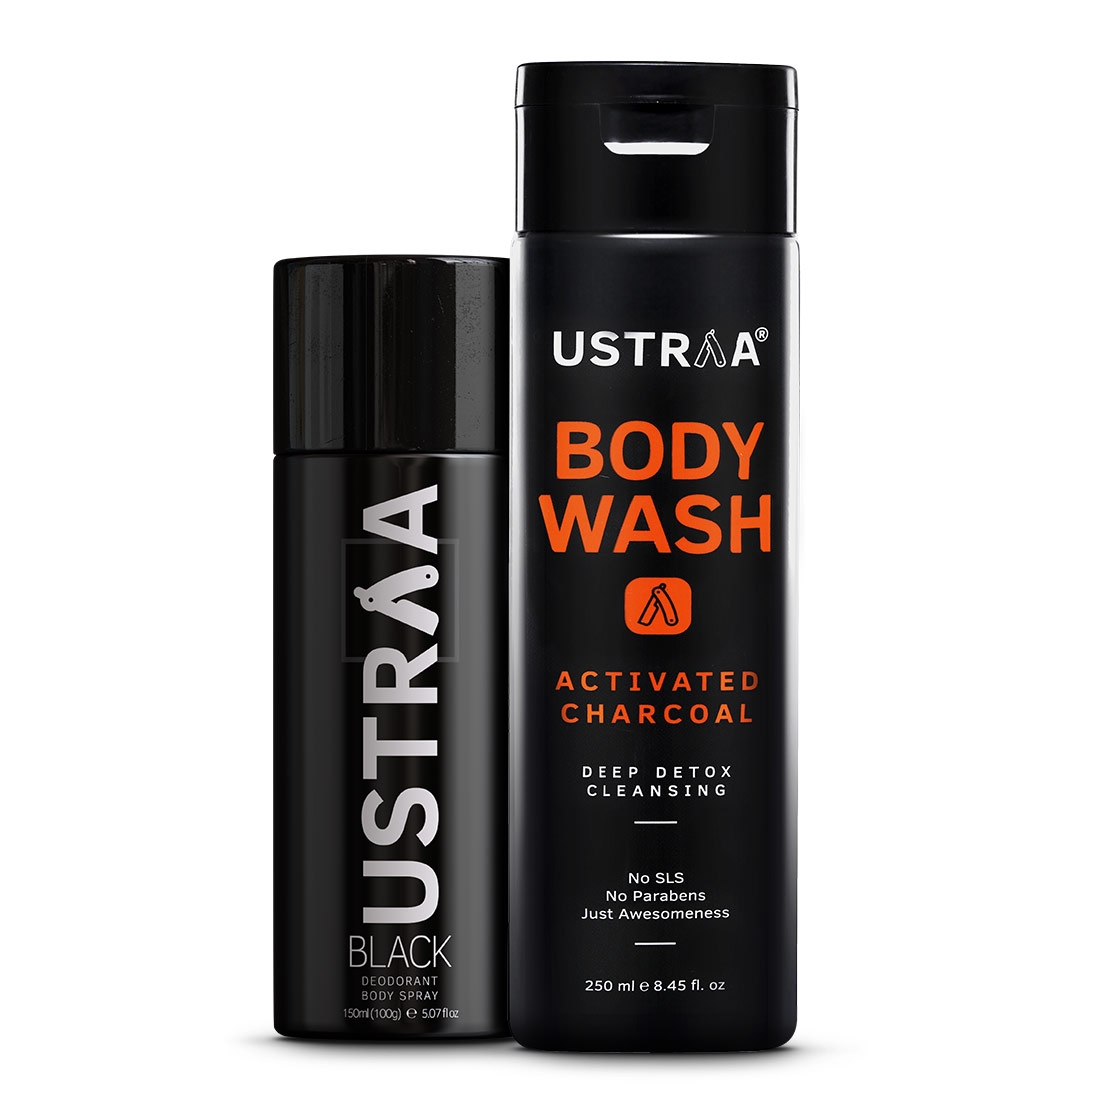 Ustraa | Ustraa Black Deodorant 150ml & Body Wash Activated Charcoal 250ml 0